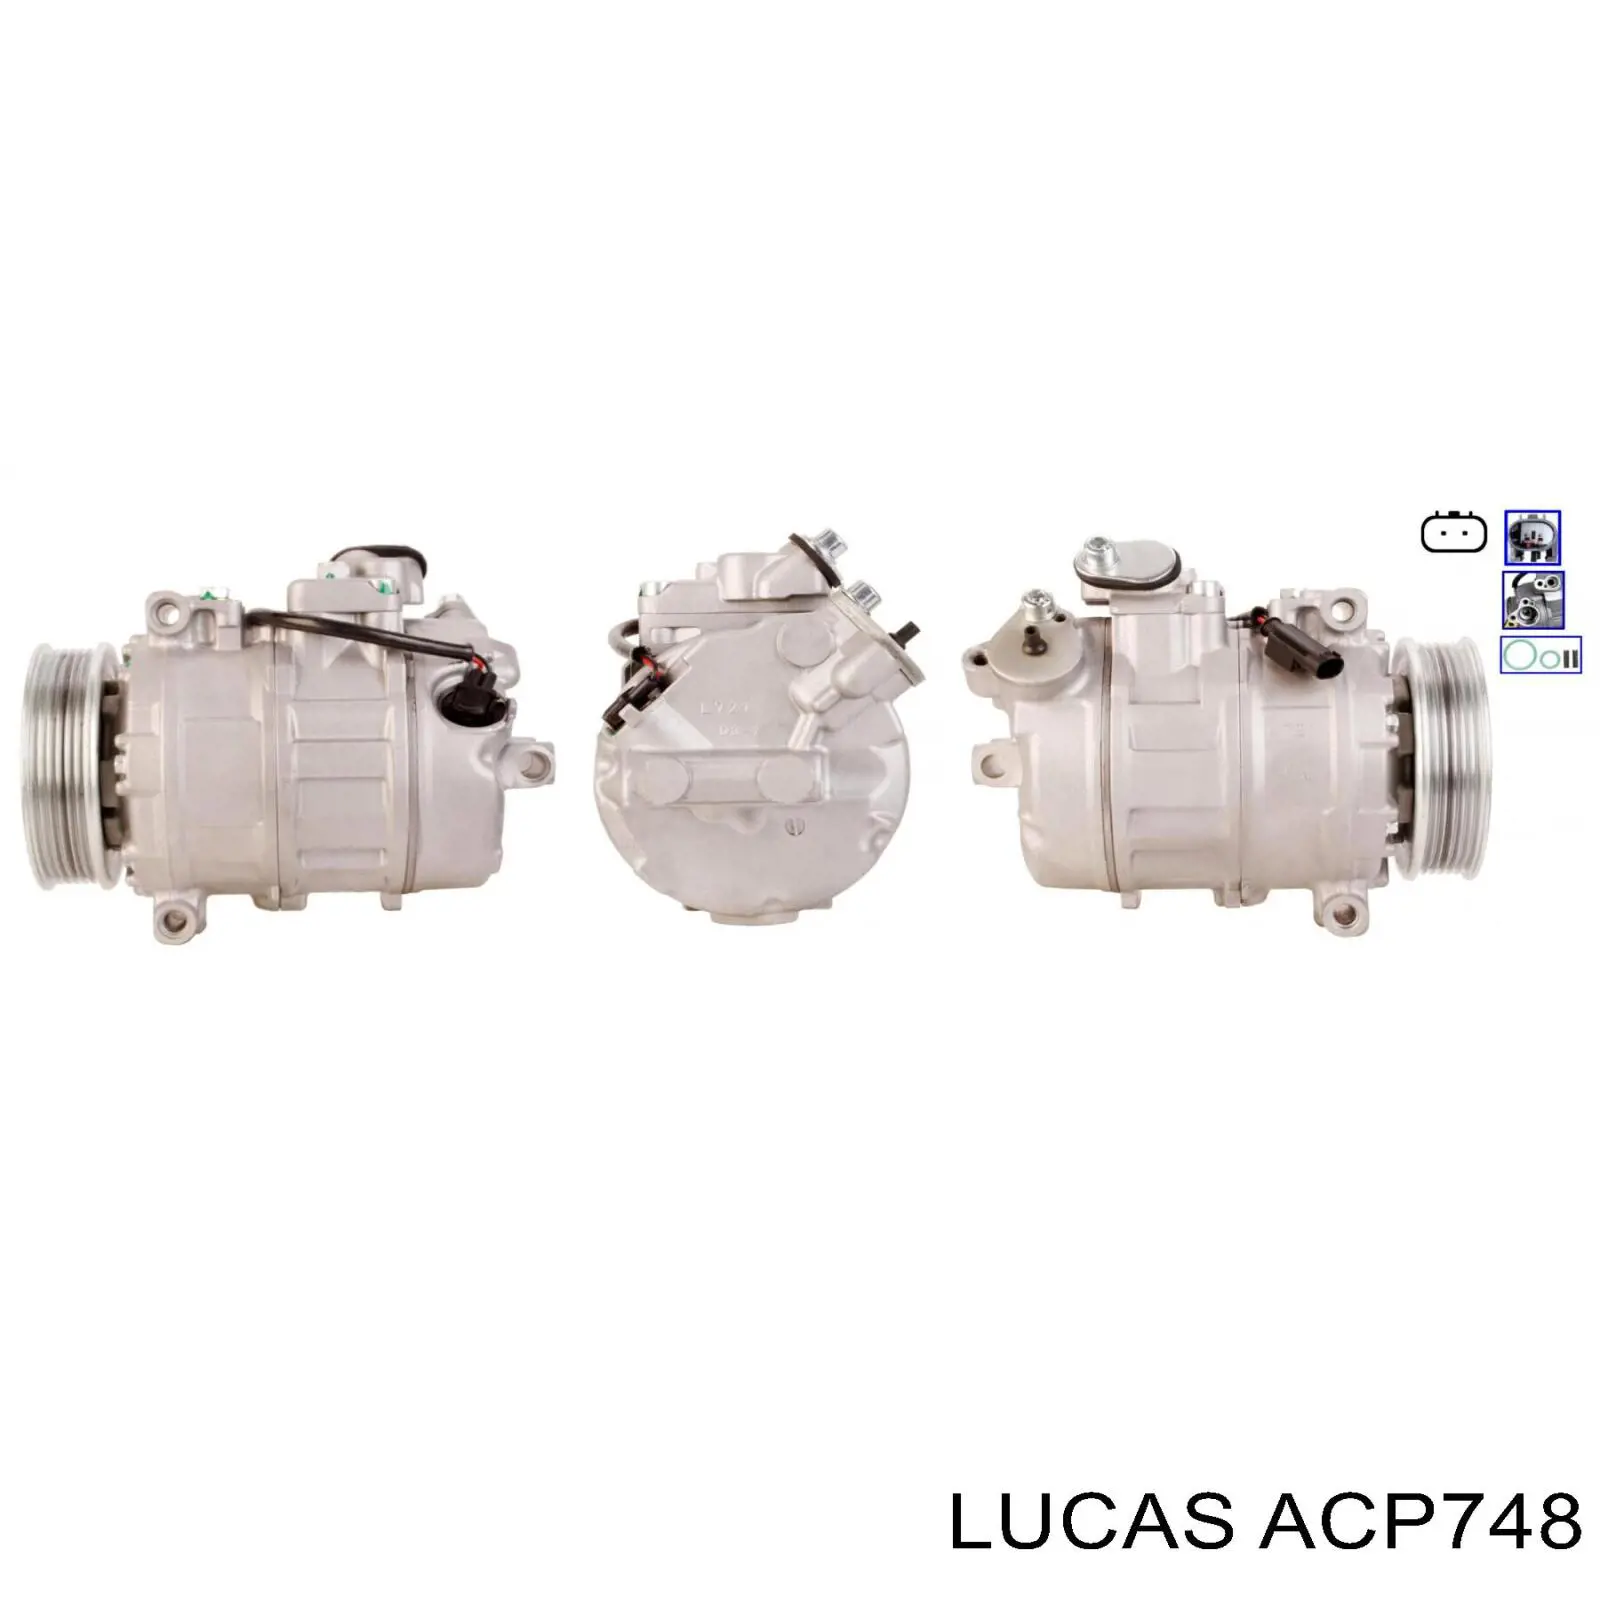 Compresor de aire acondicionado ACP748 Lucas